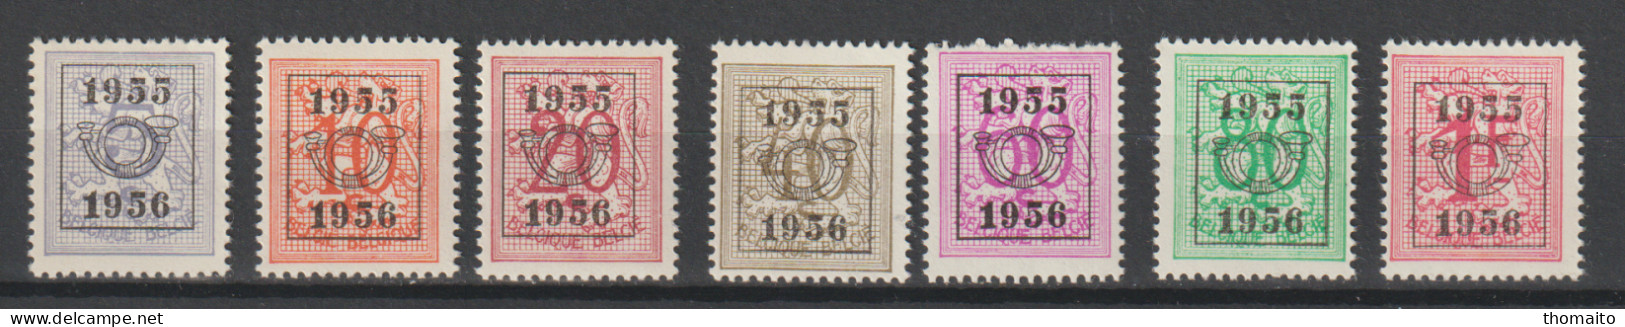 België/Belgique - OBP/COB PRE652-658 - 1955/1956 - Cijfer Op Heraldieke Leeuw - MNH/NSC/** - Typos 1951-80 (Chiffre Sur Lion)